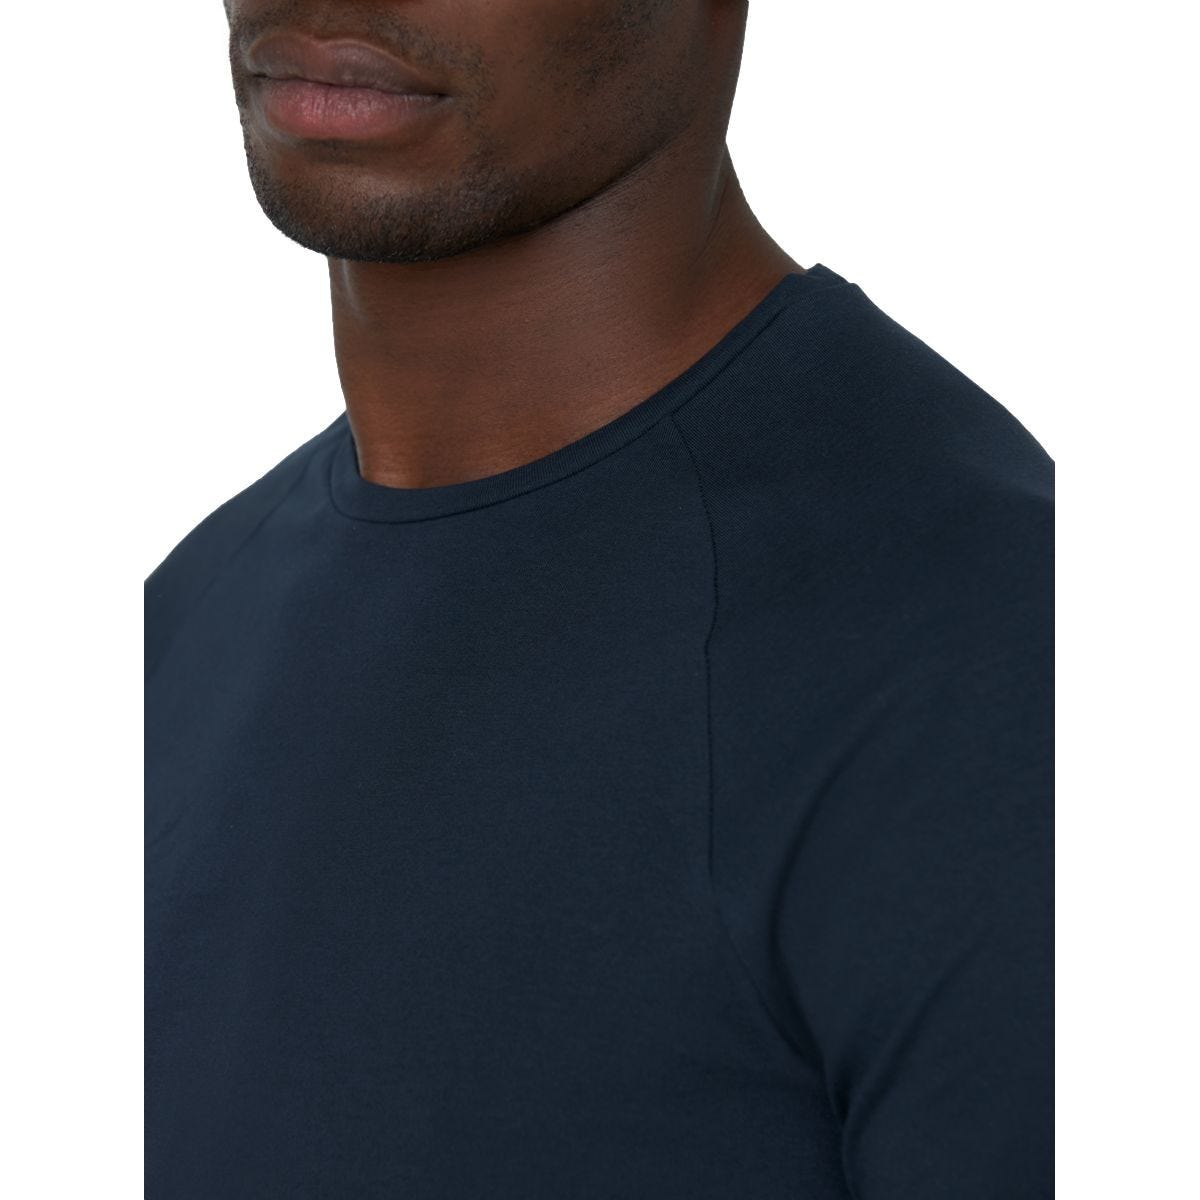 Tee-shirt Temp-IQ Bleu marine - Dickies - Taille 3XL 3